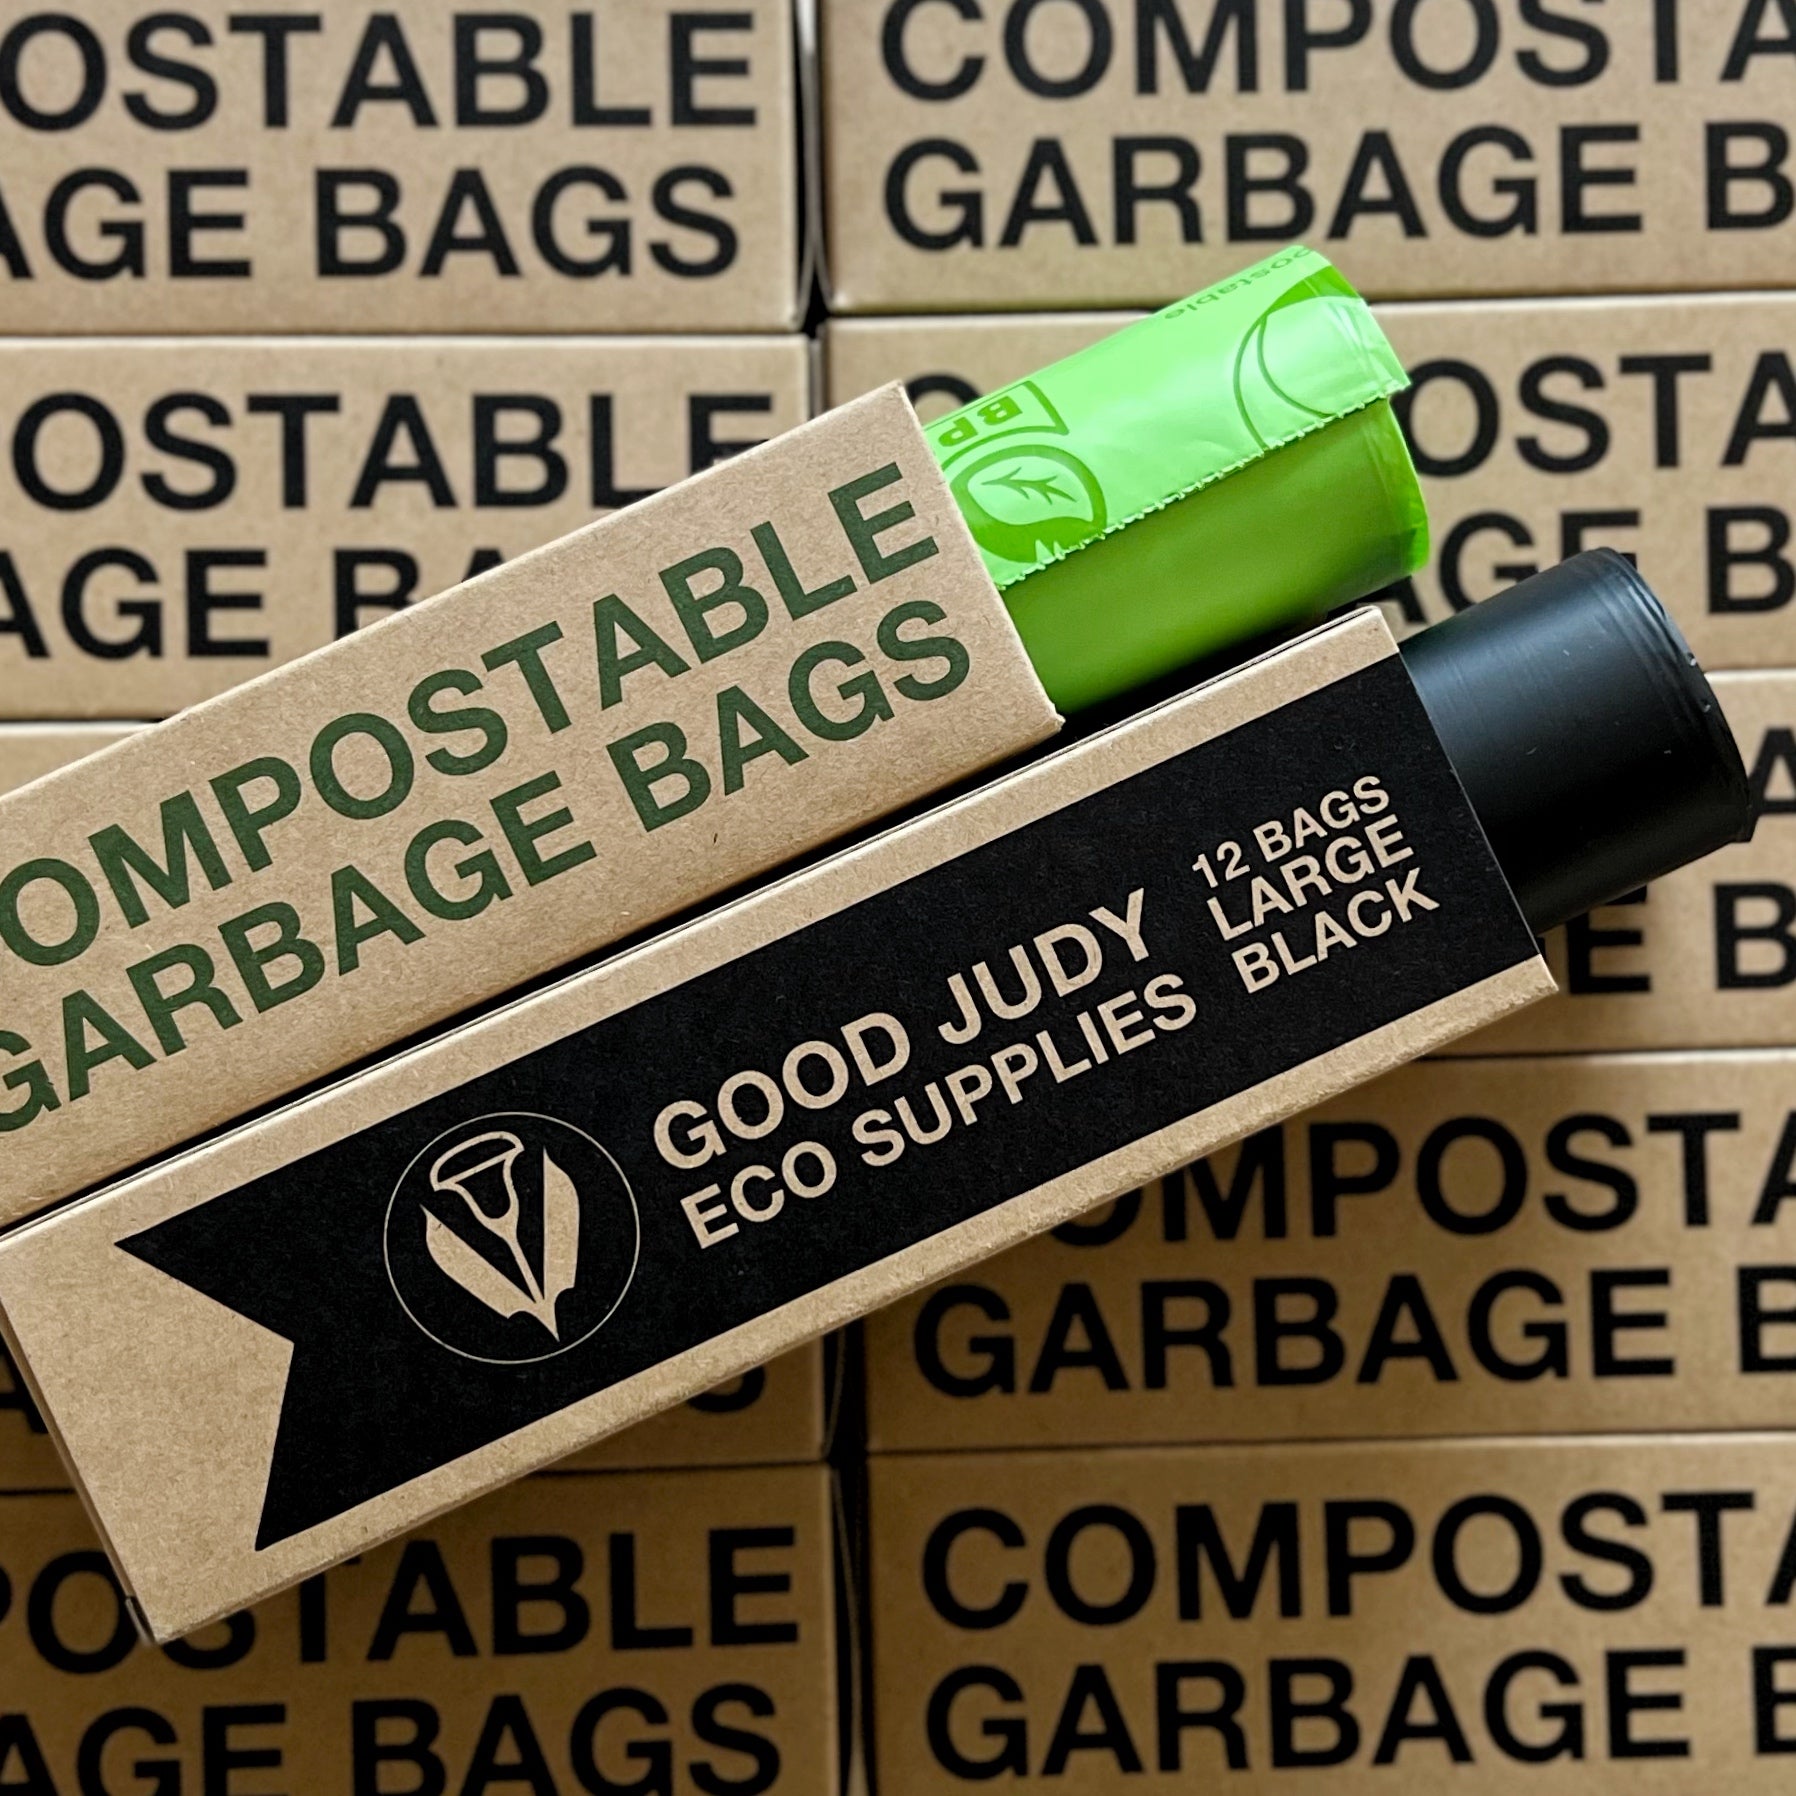 Compostable Garbage Bags (Medium) – Good Judy